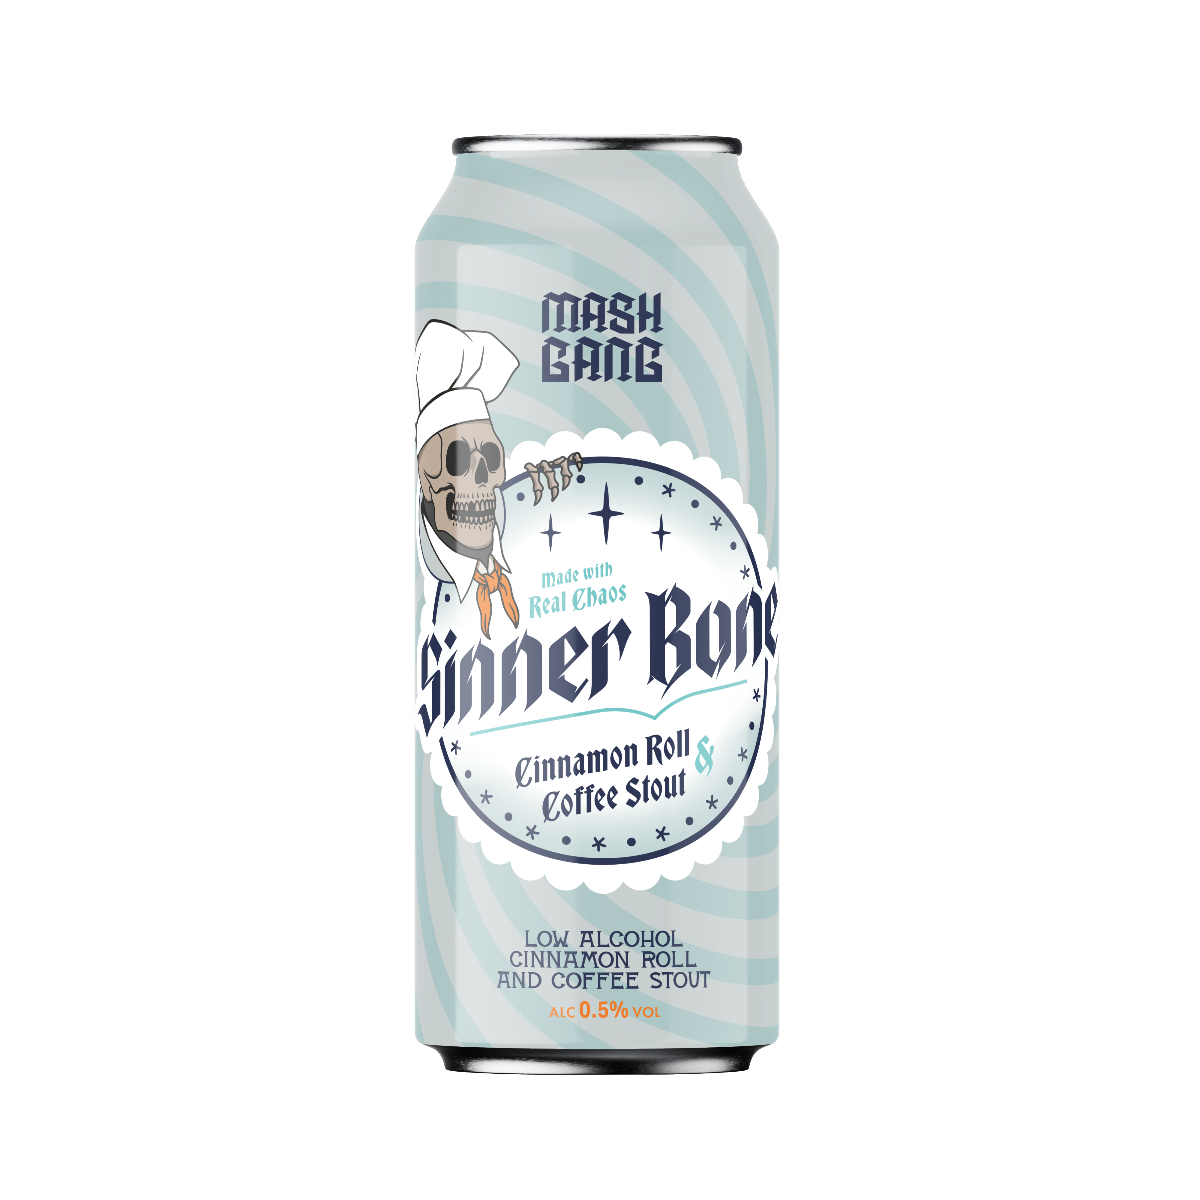 Sinner Bone - 0.5% - Cinnamon Coffee Stout - 440ml - 4 Pack